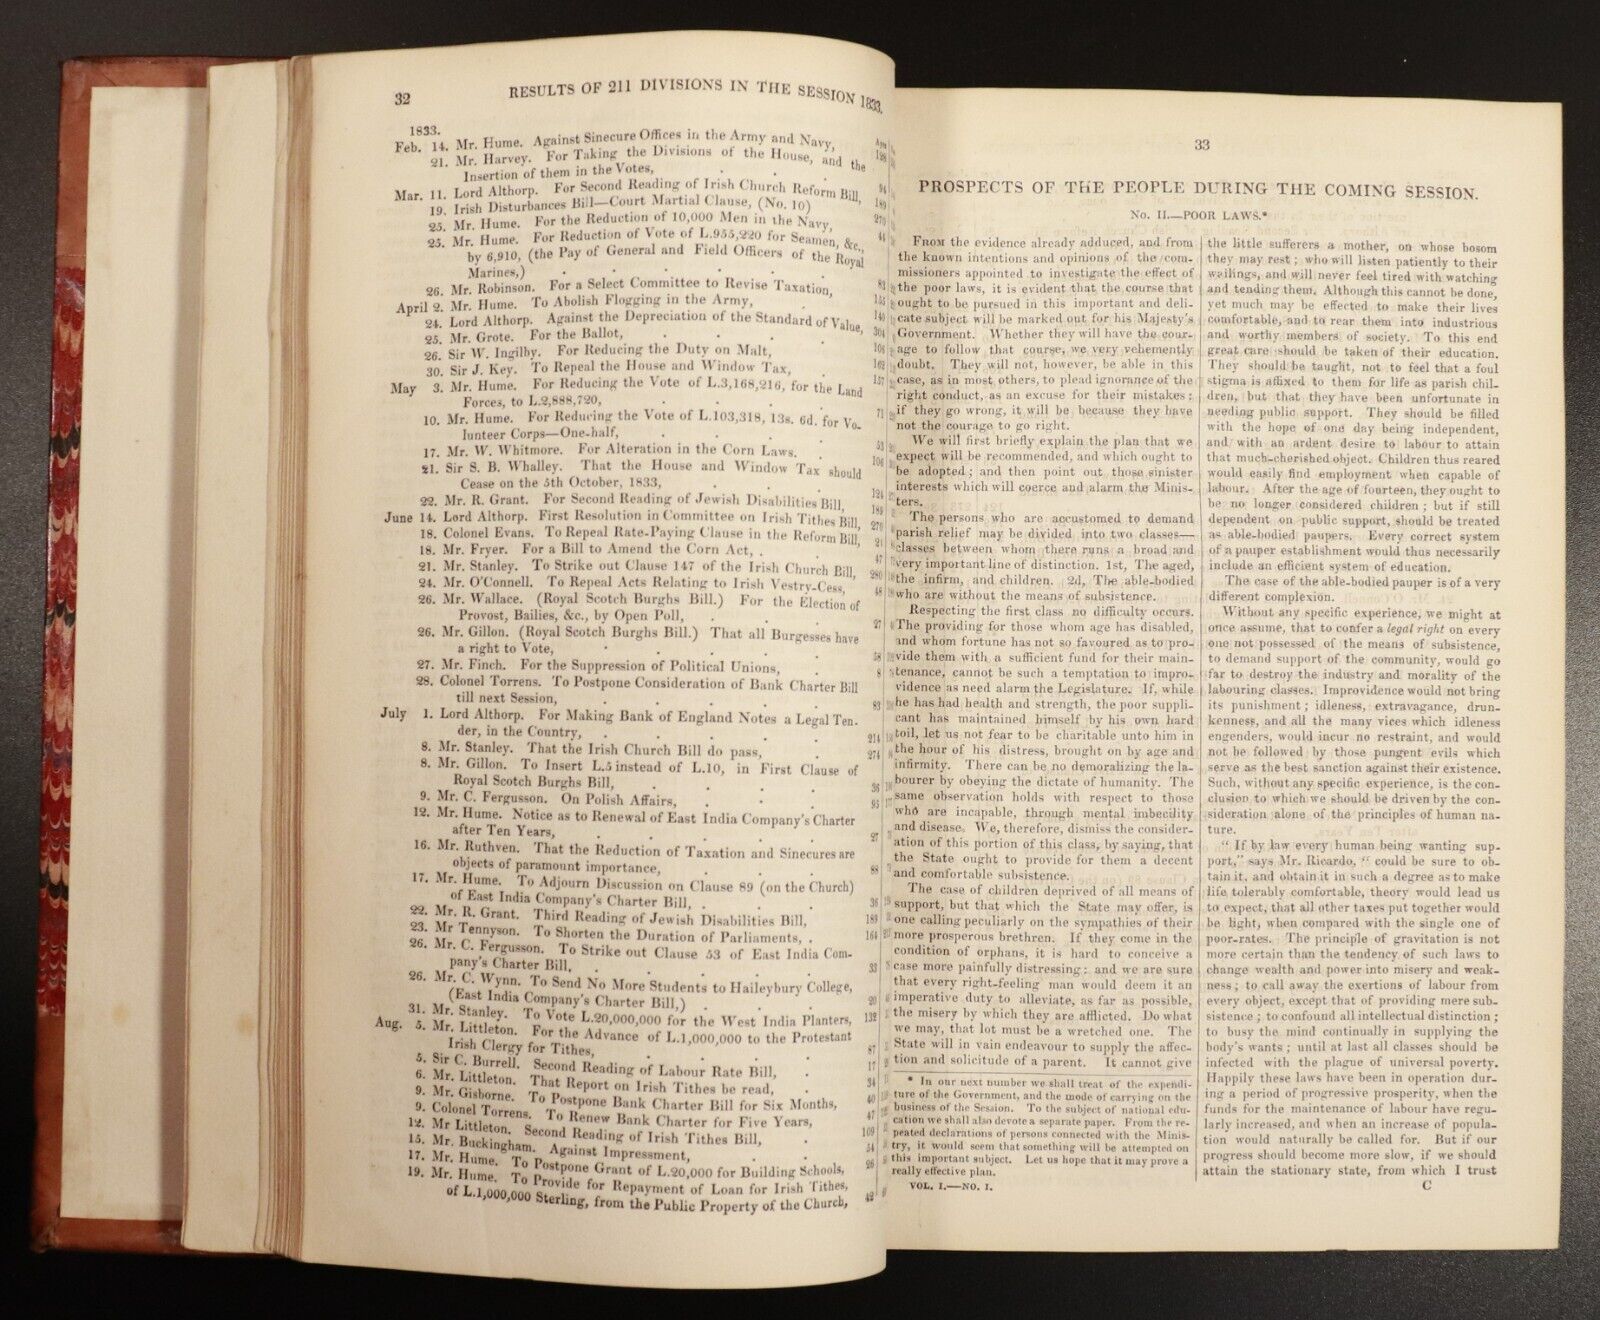 1834 Tait's Edinburgh Magazine For 1834 Antiquarian British History Book